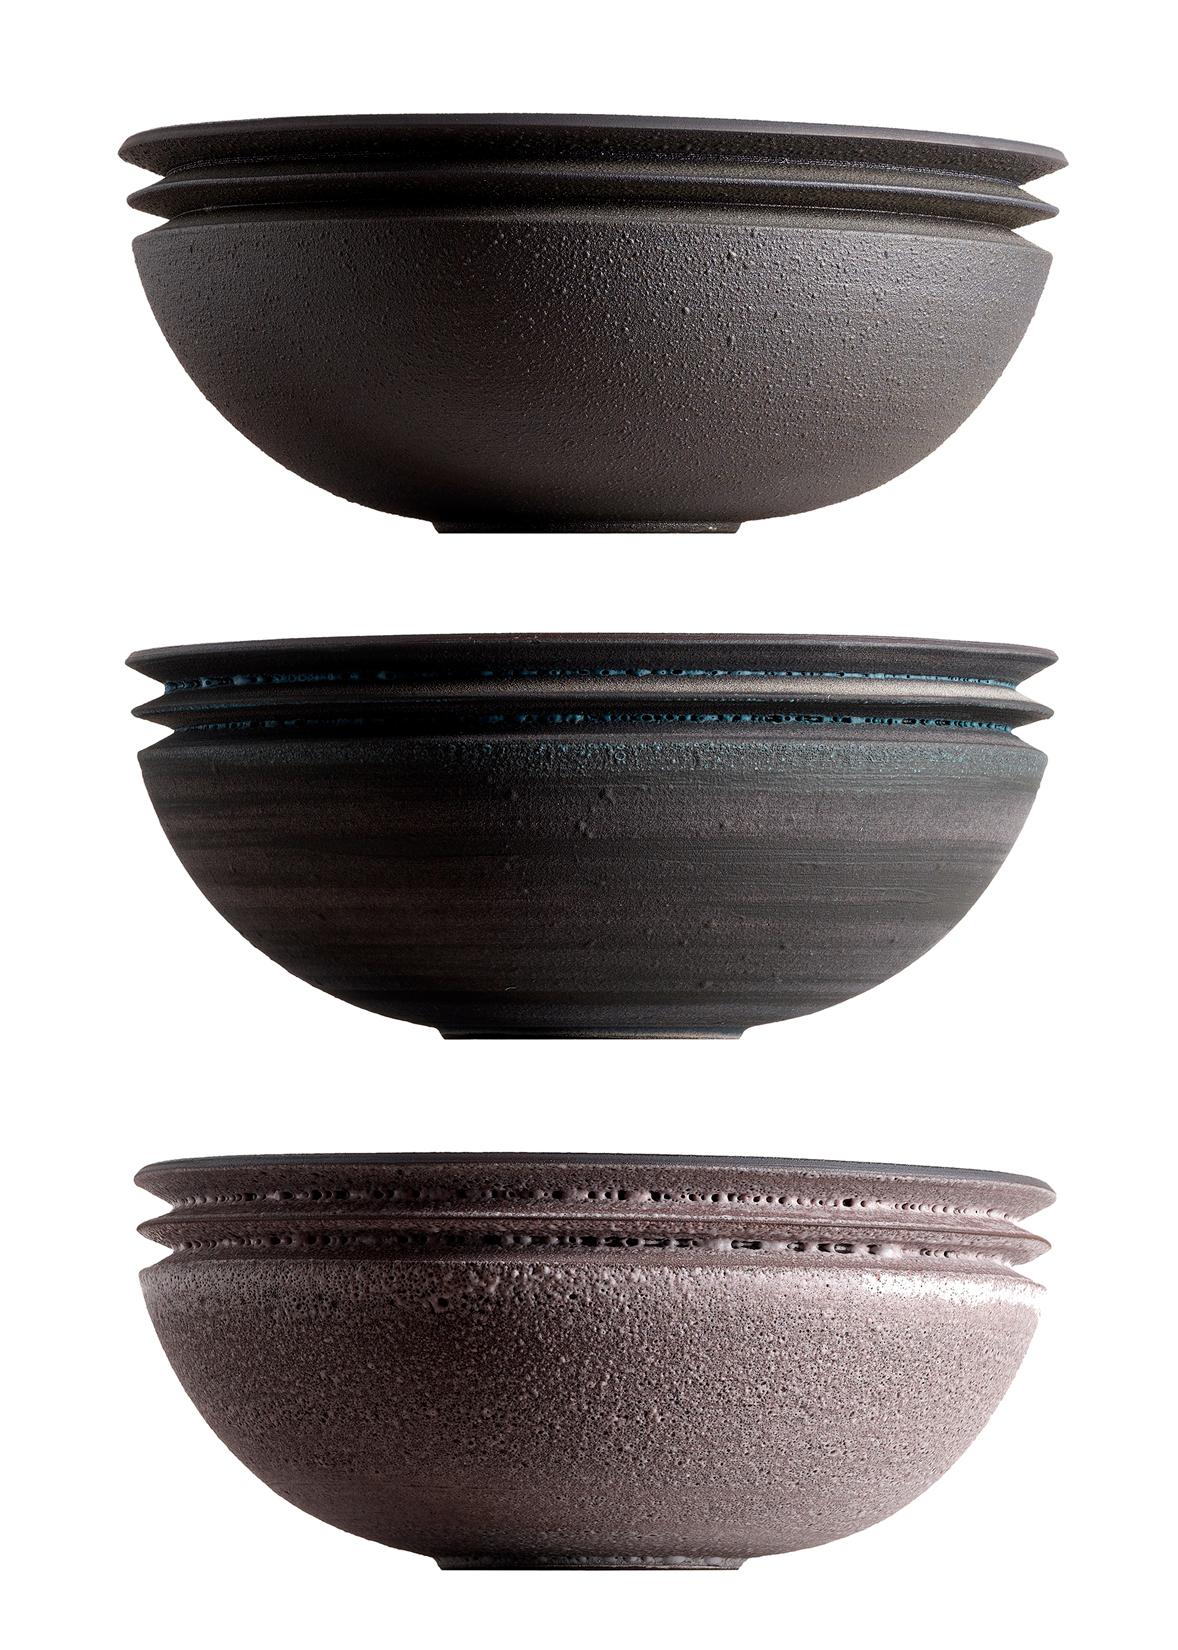 Other Twilight, Vessel N, Bowl, Slip Cast Ceramic, N/O Vessels Collection For Sale